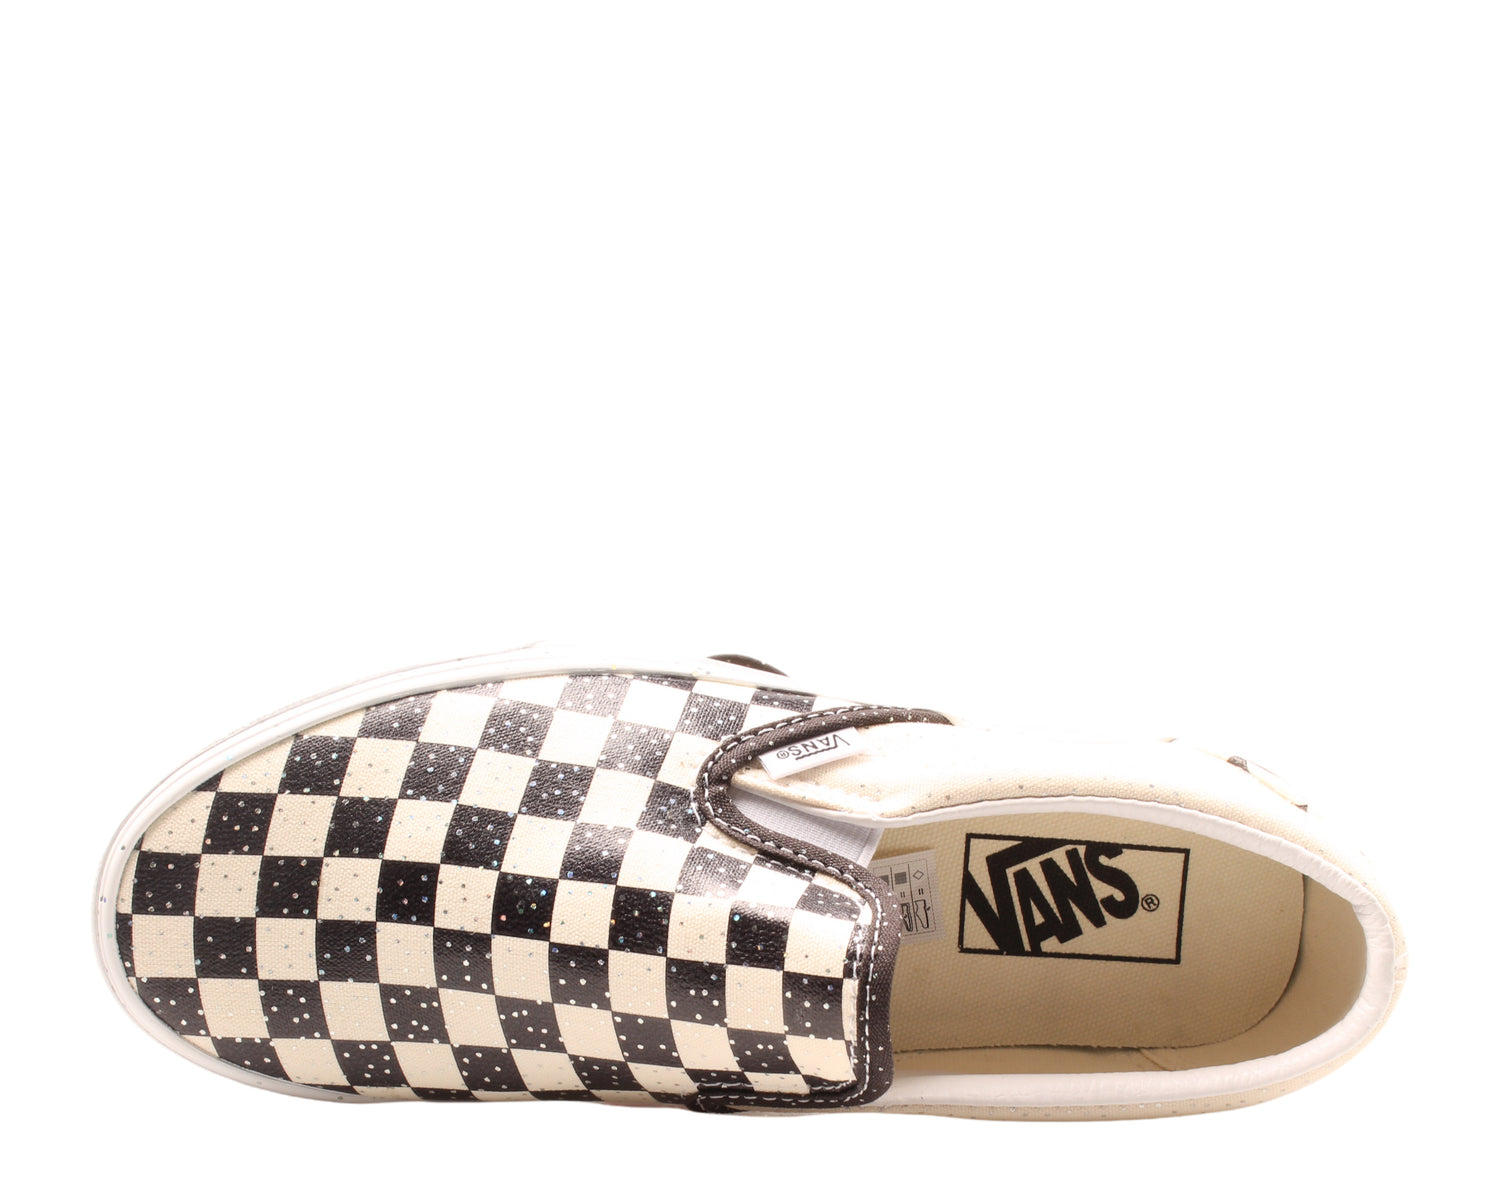 Vans Classic Slip-On Checkerboard Low Top Sneakers